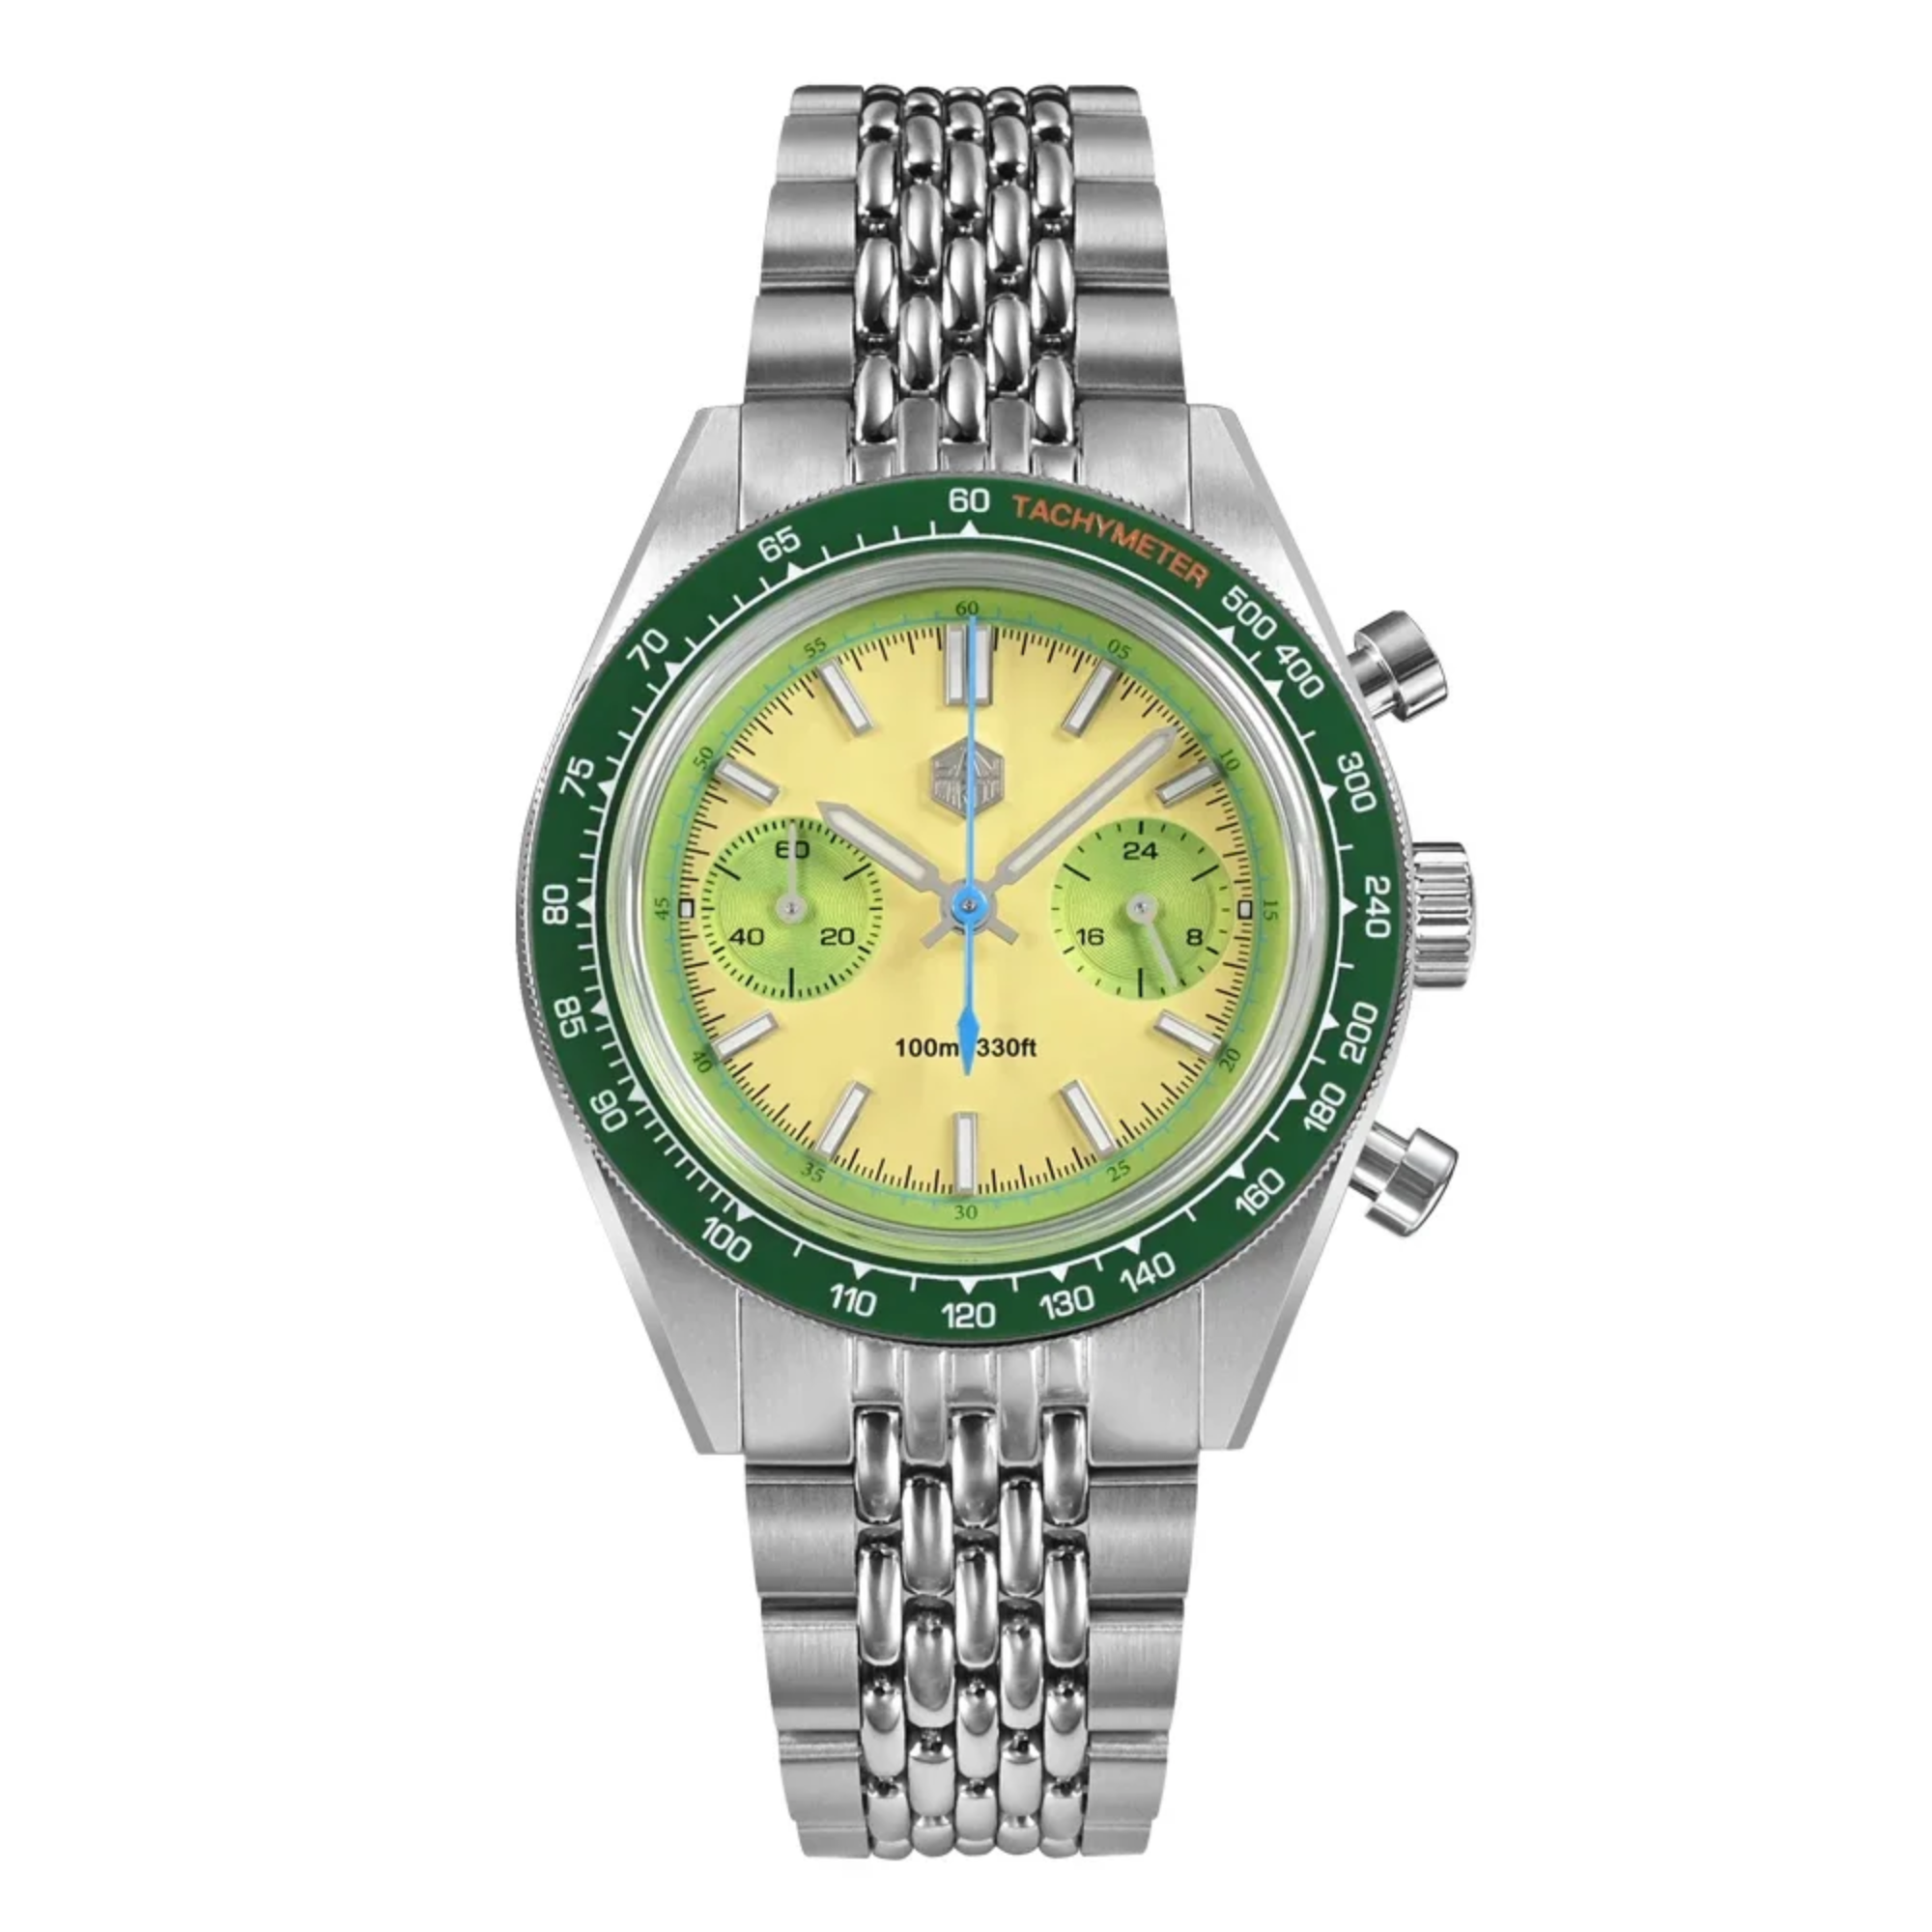 San Martin Chronograph VK64 Quartz Watch Original Design SN0116 - Avacado